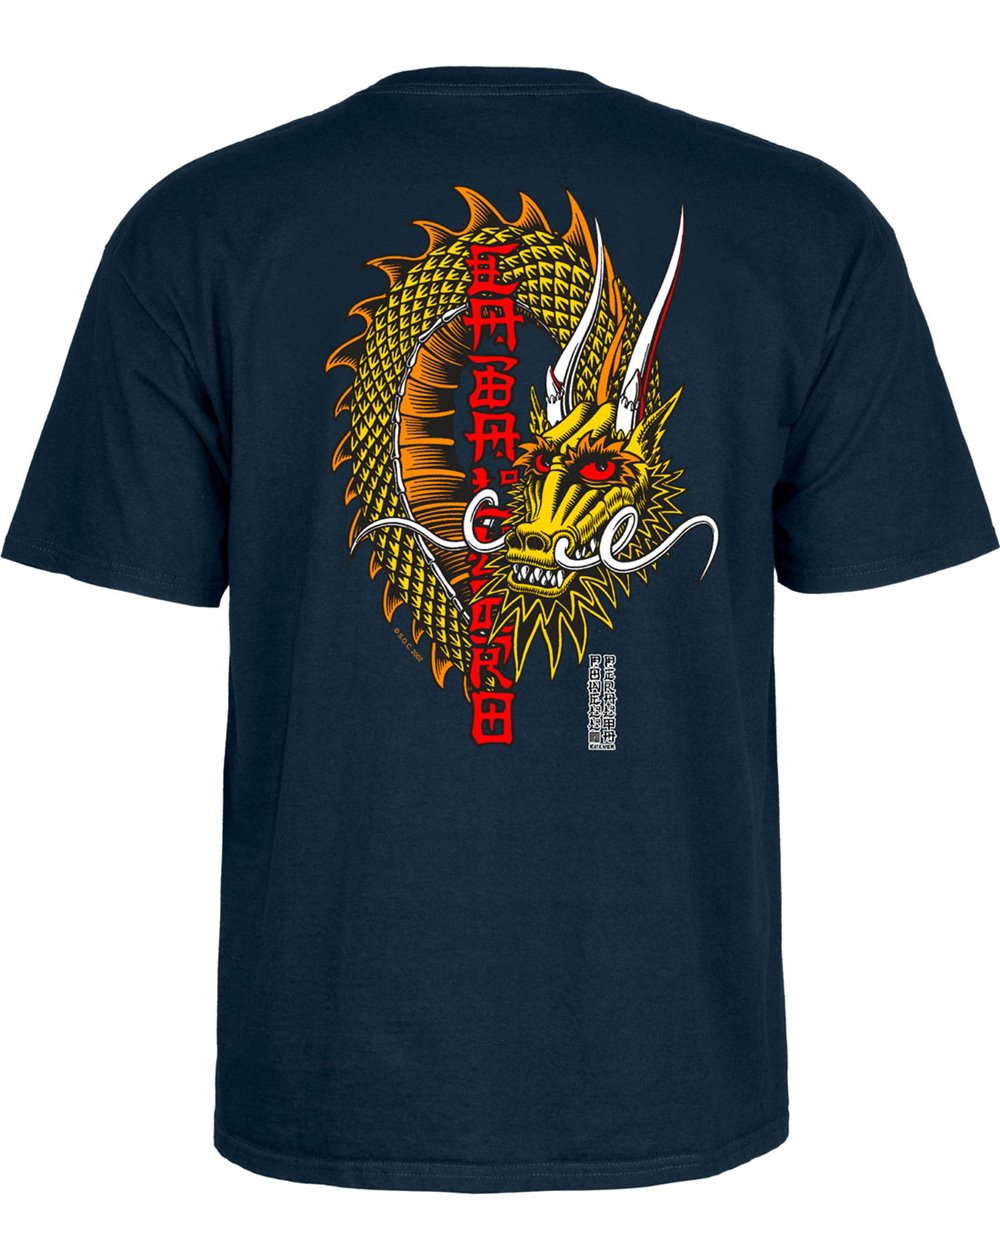 Powell Peralta T-Shirt Homme Steve Caballero Ban This Dragon (Navy)